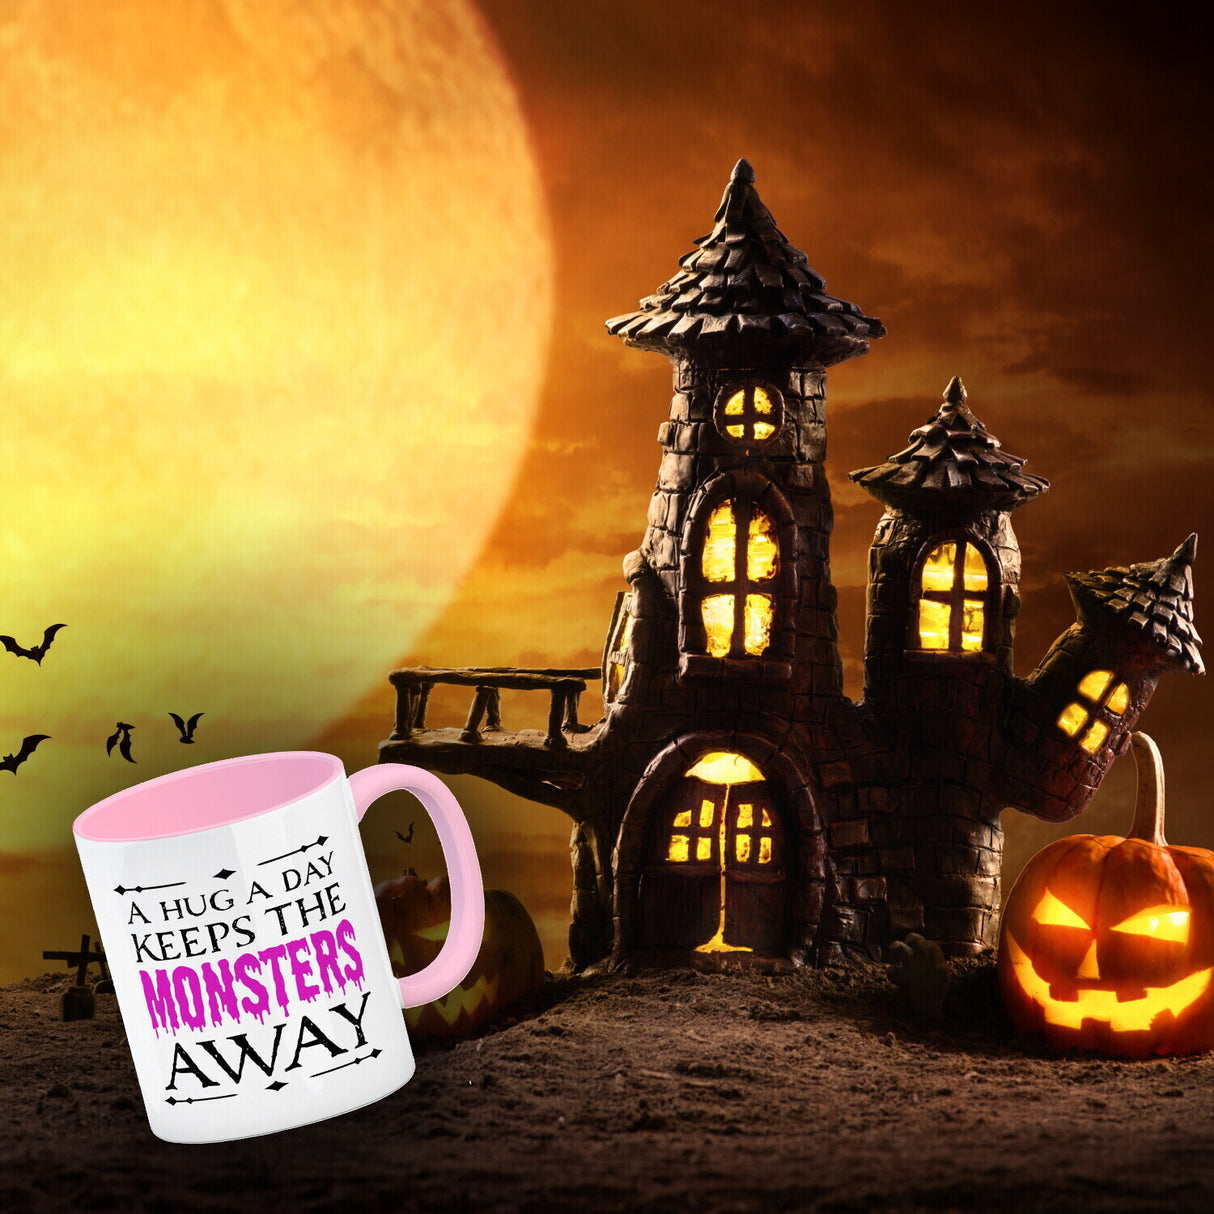 Kaffeetasse für Halloween mit Spruch - A hug a day keeps the monsters away